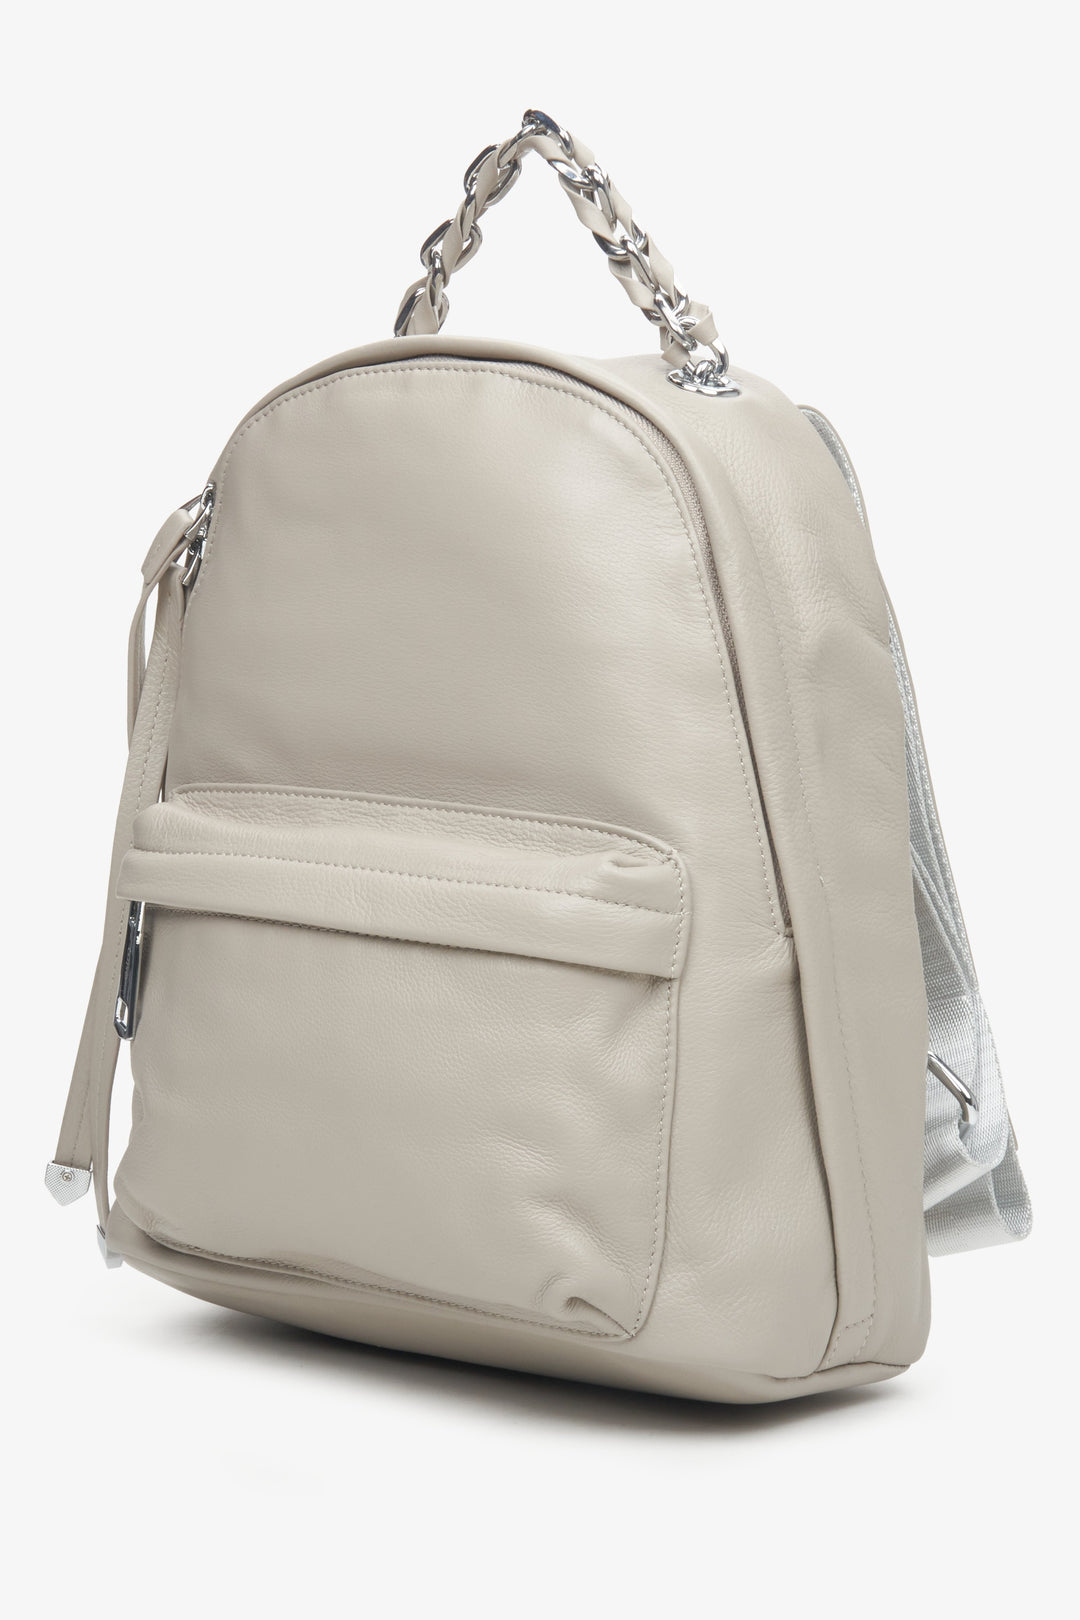 Estro's women's light grey leather backpack.